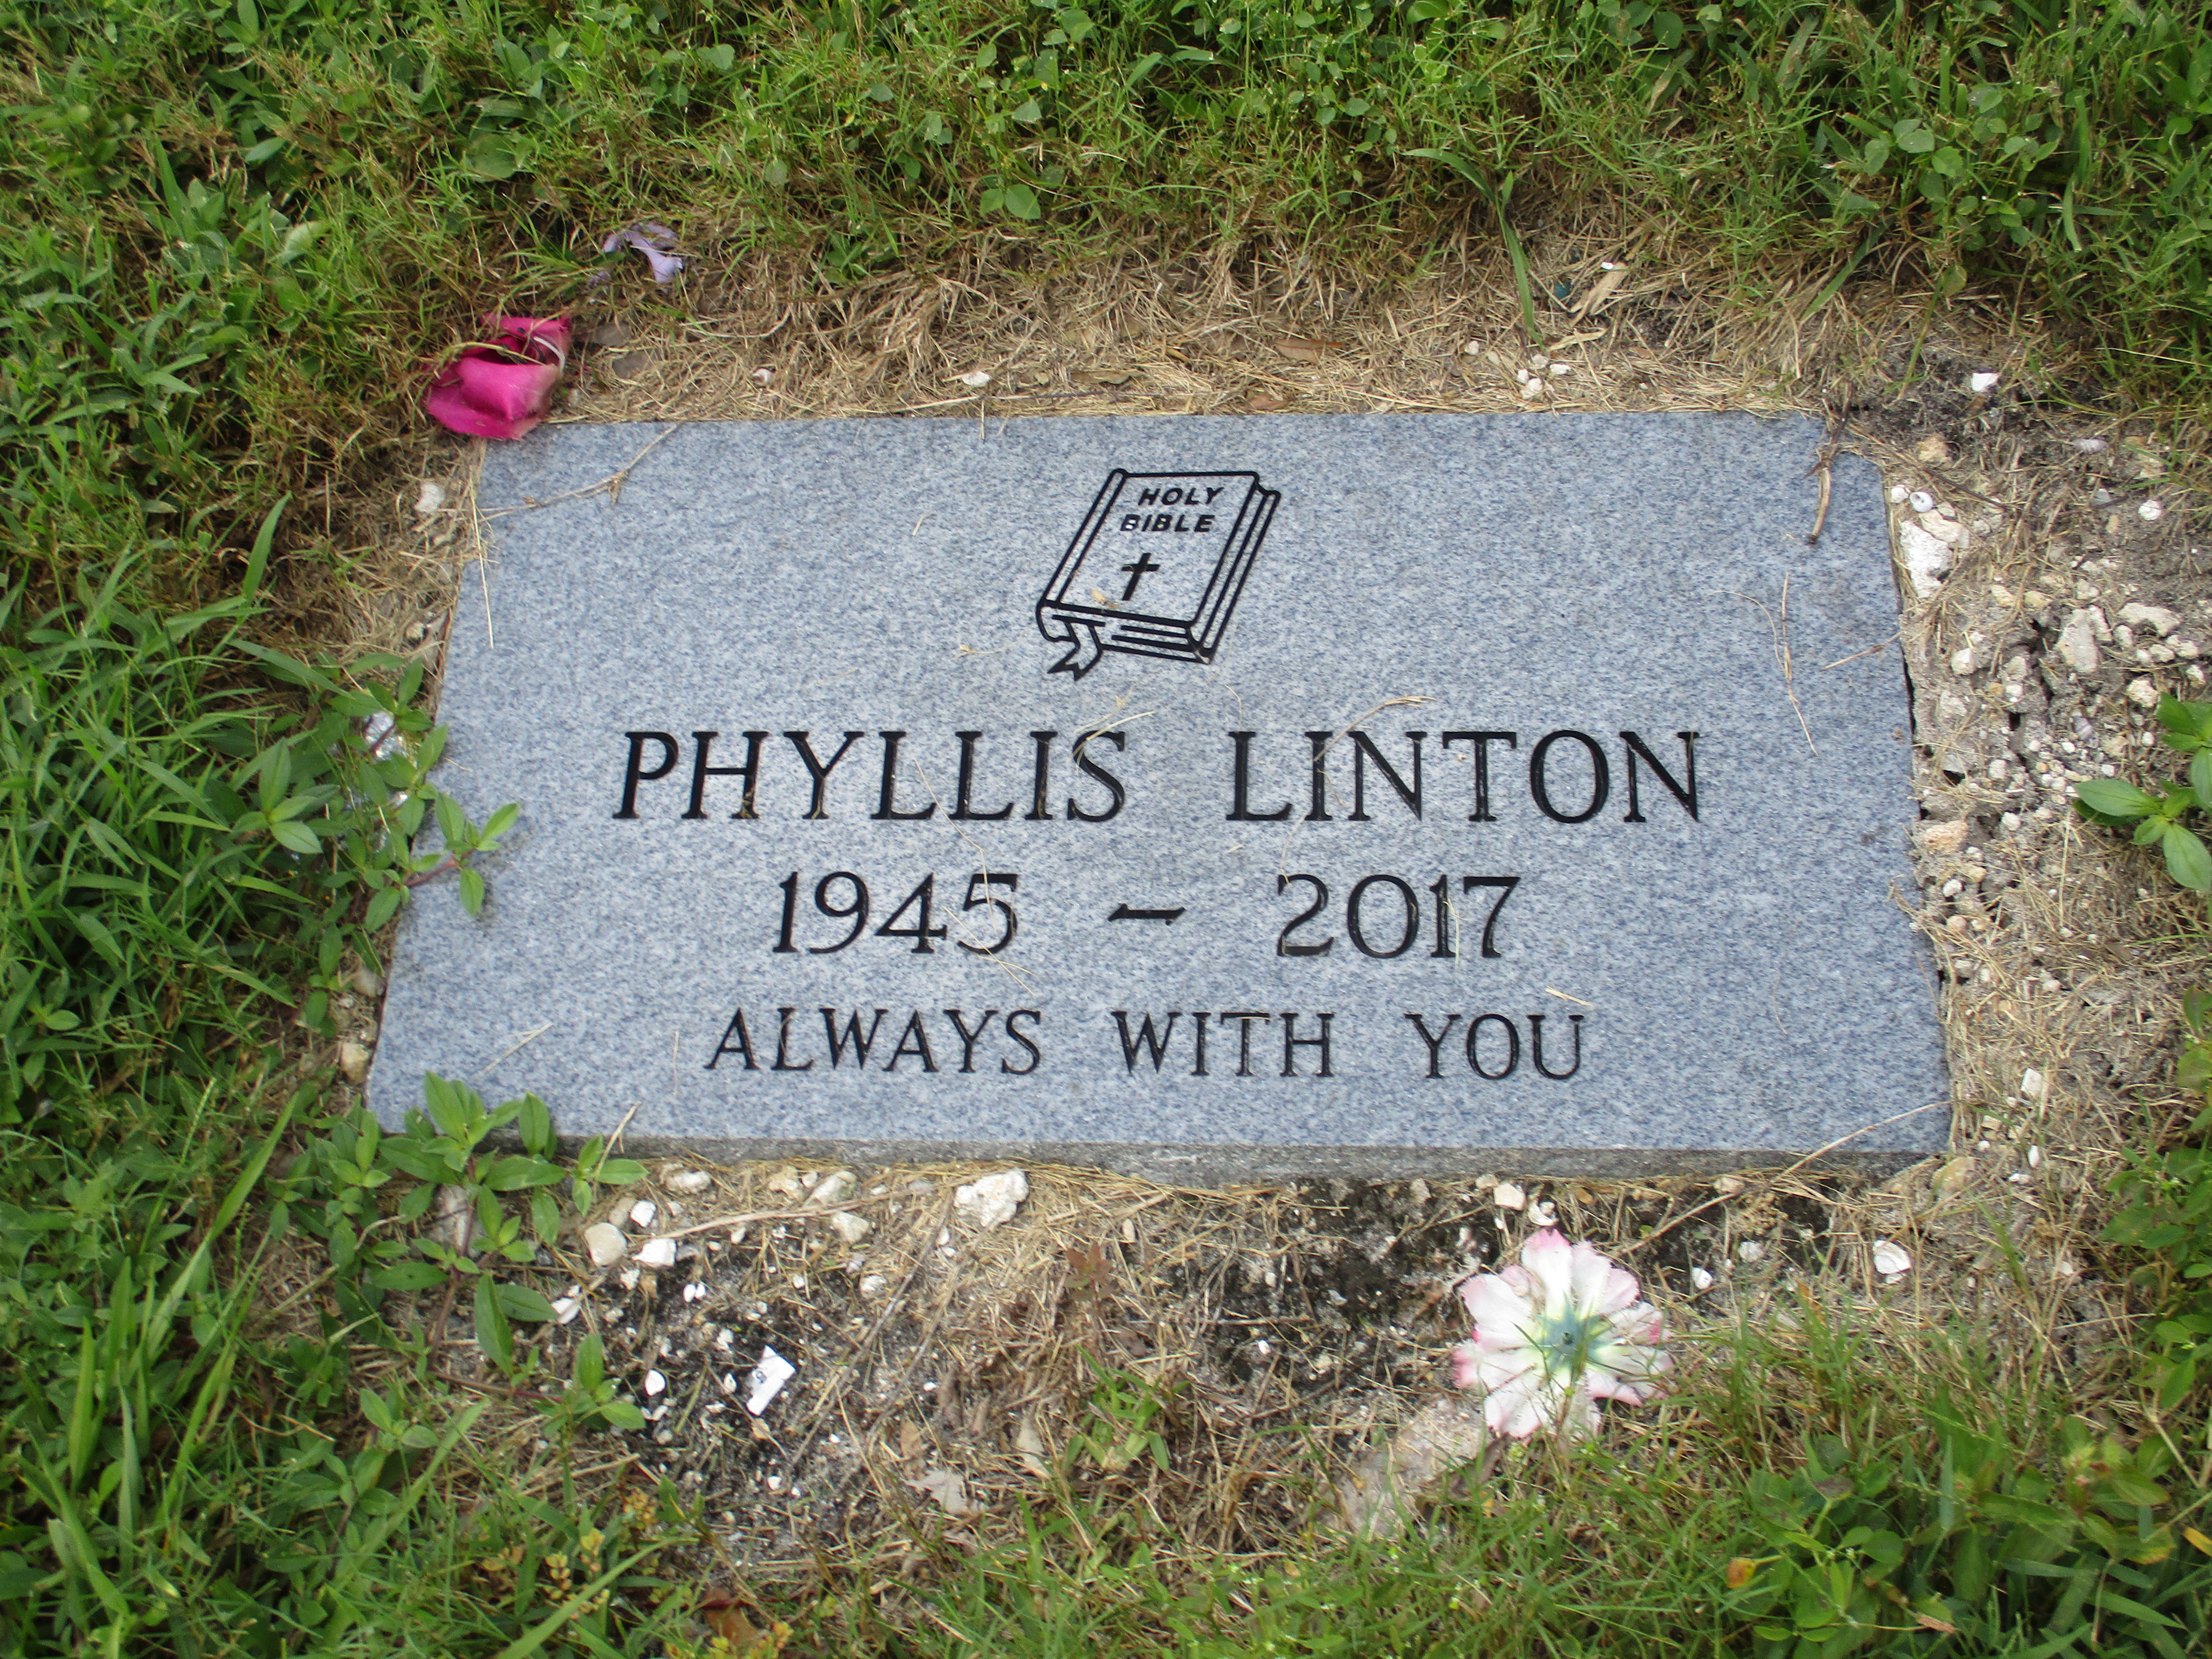 Phyllis Linton